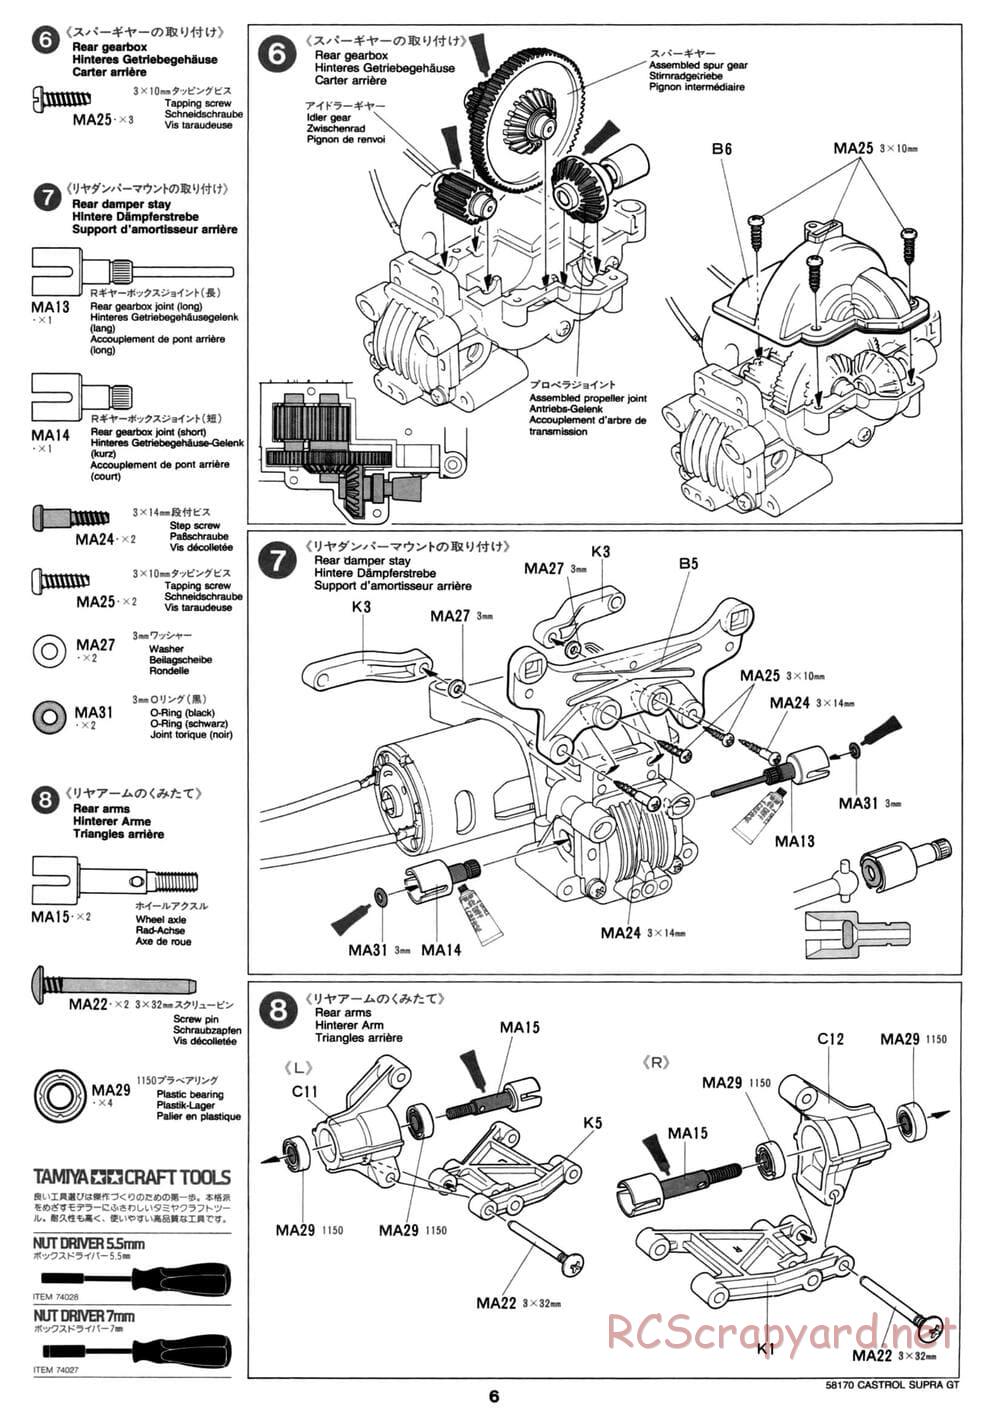 Tamiya - Castrol Toyota Tom's Supra GT - TA-02W Chassis - Manual - Page 6